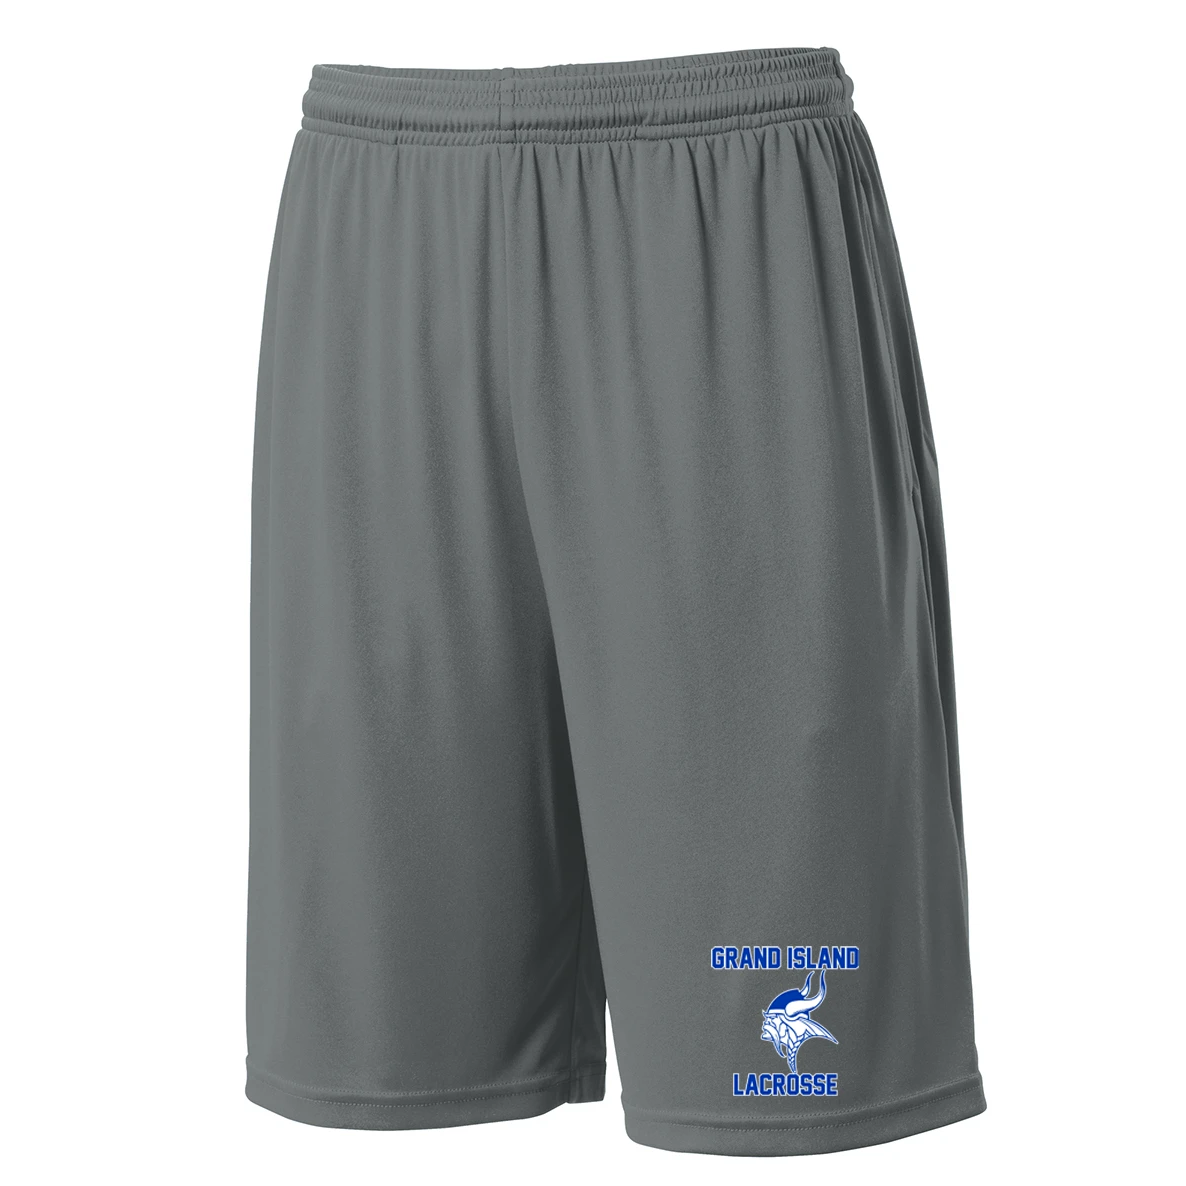 Grand Island Lacrosse Shorts - Old Logo